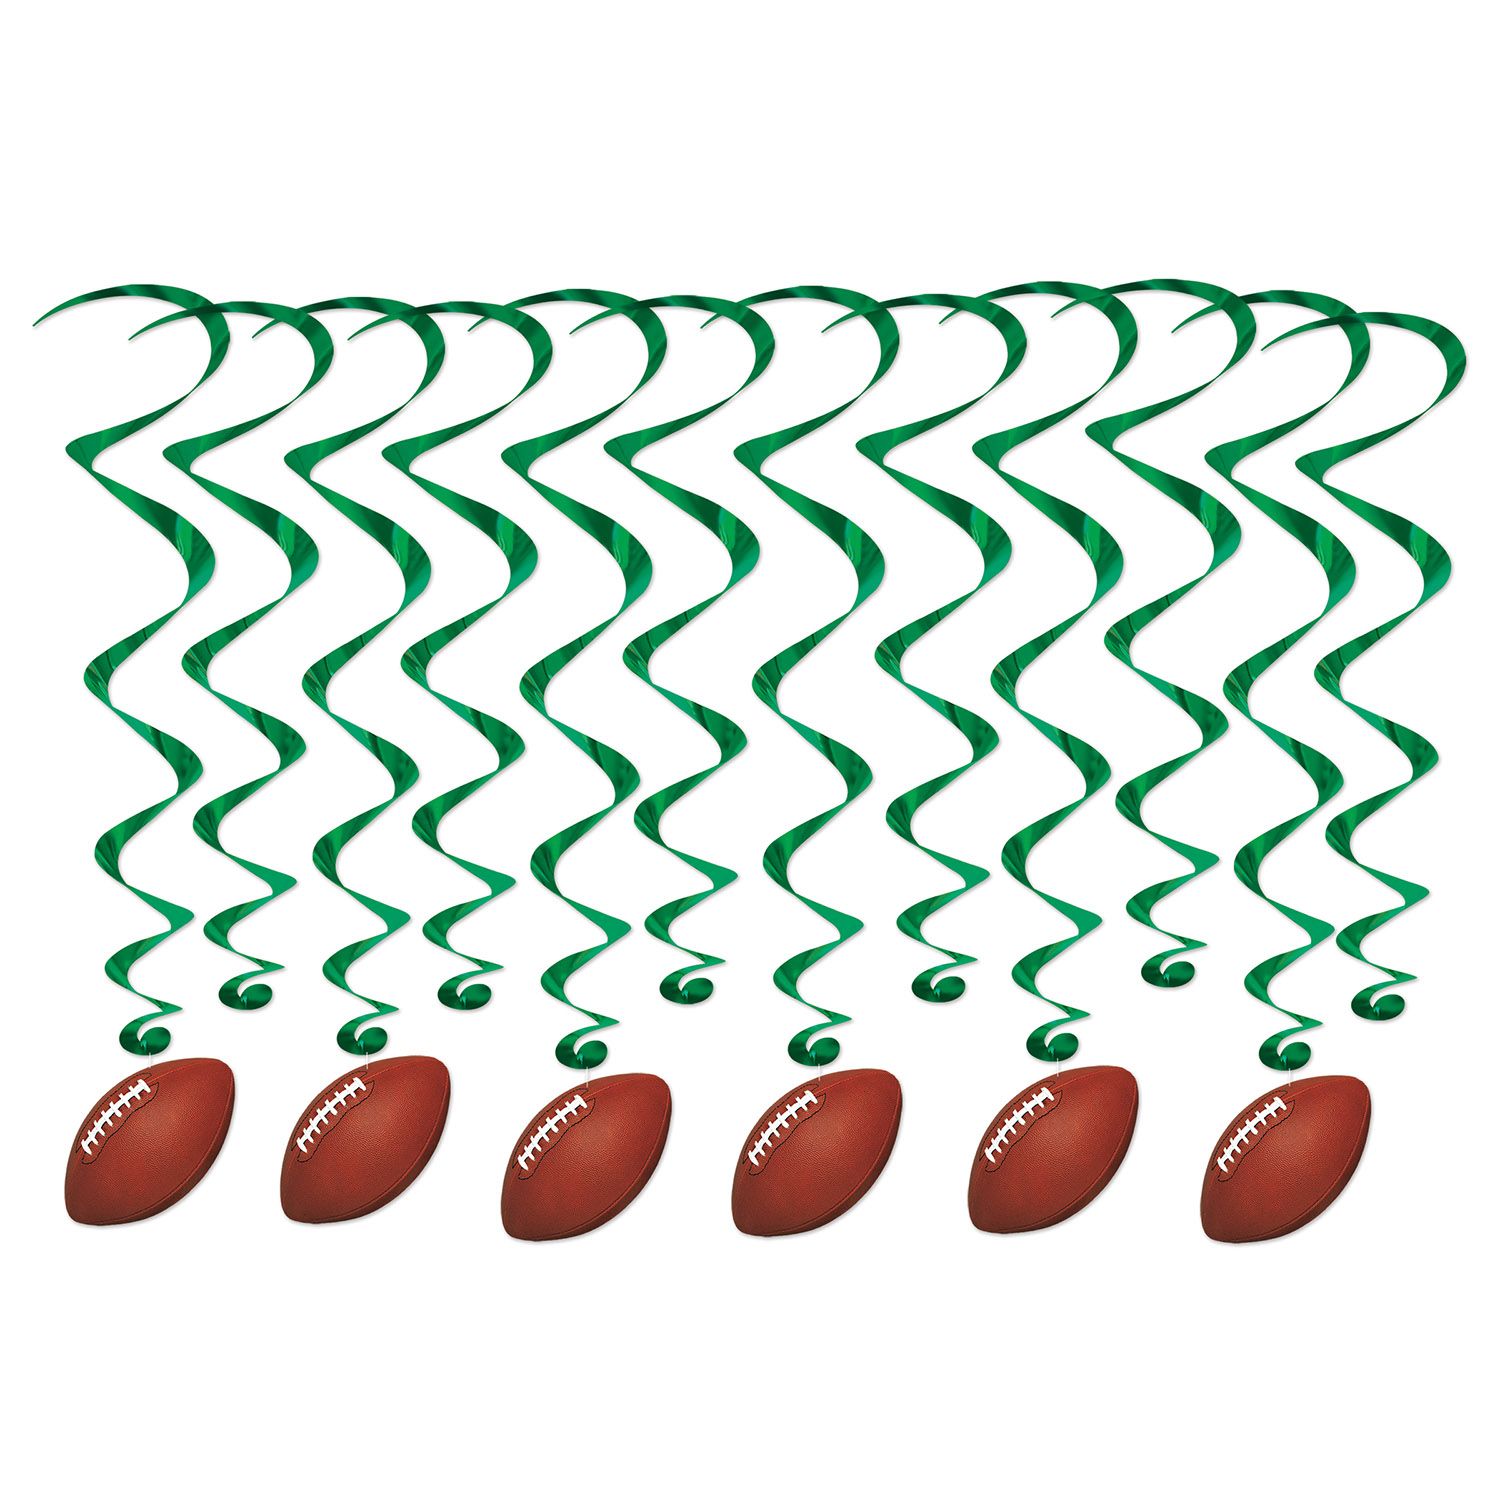 The Beistle Company Football Beads